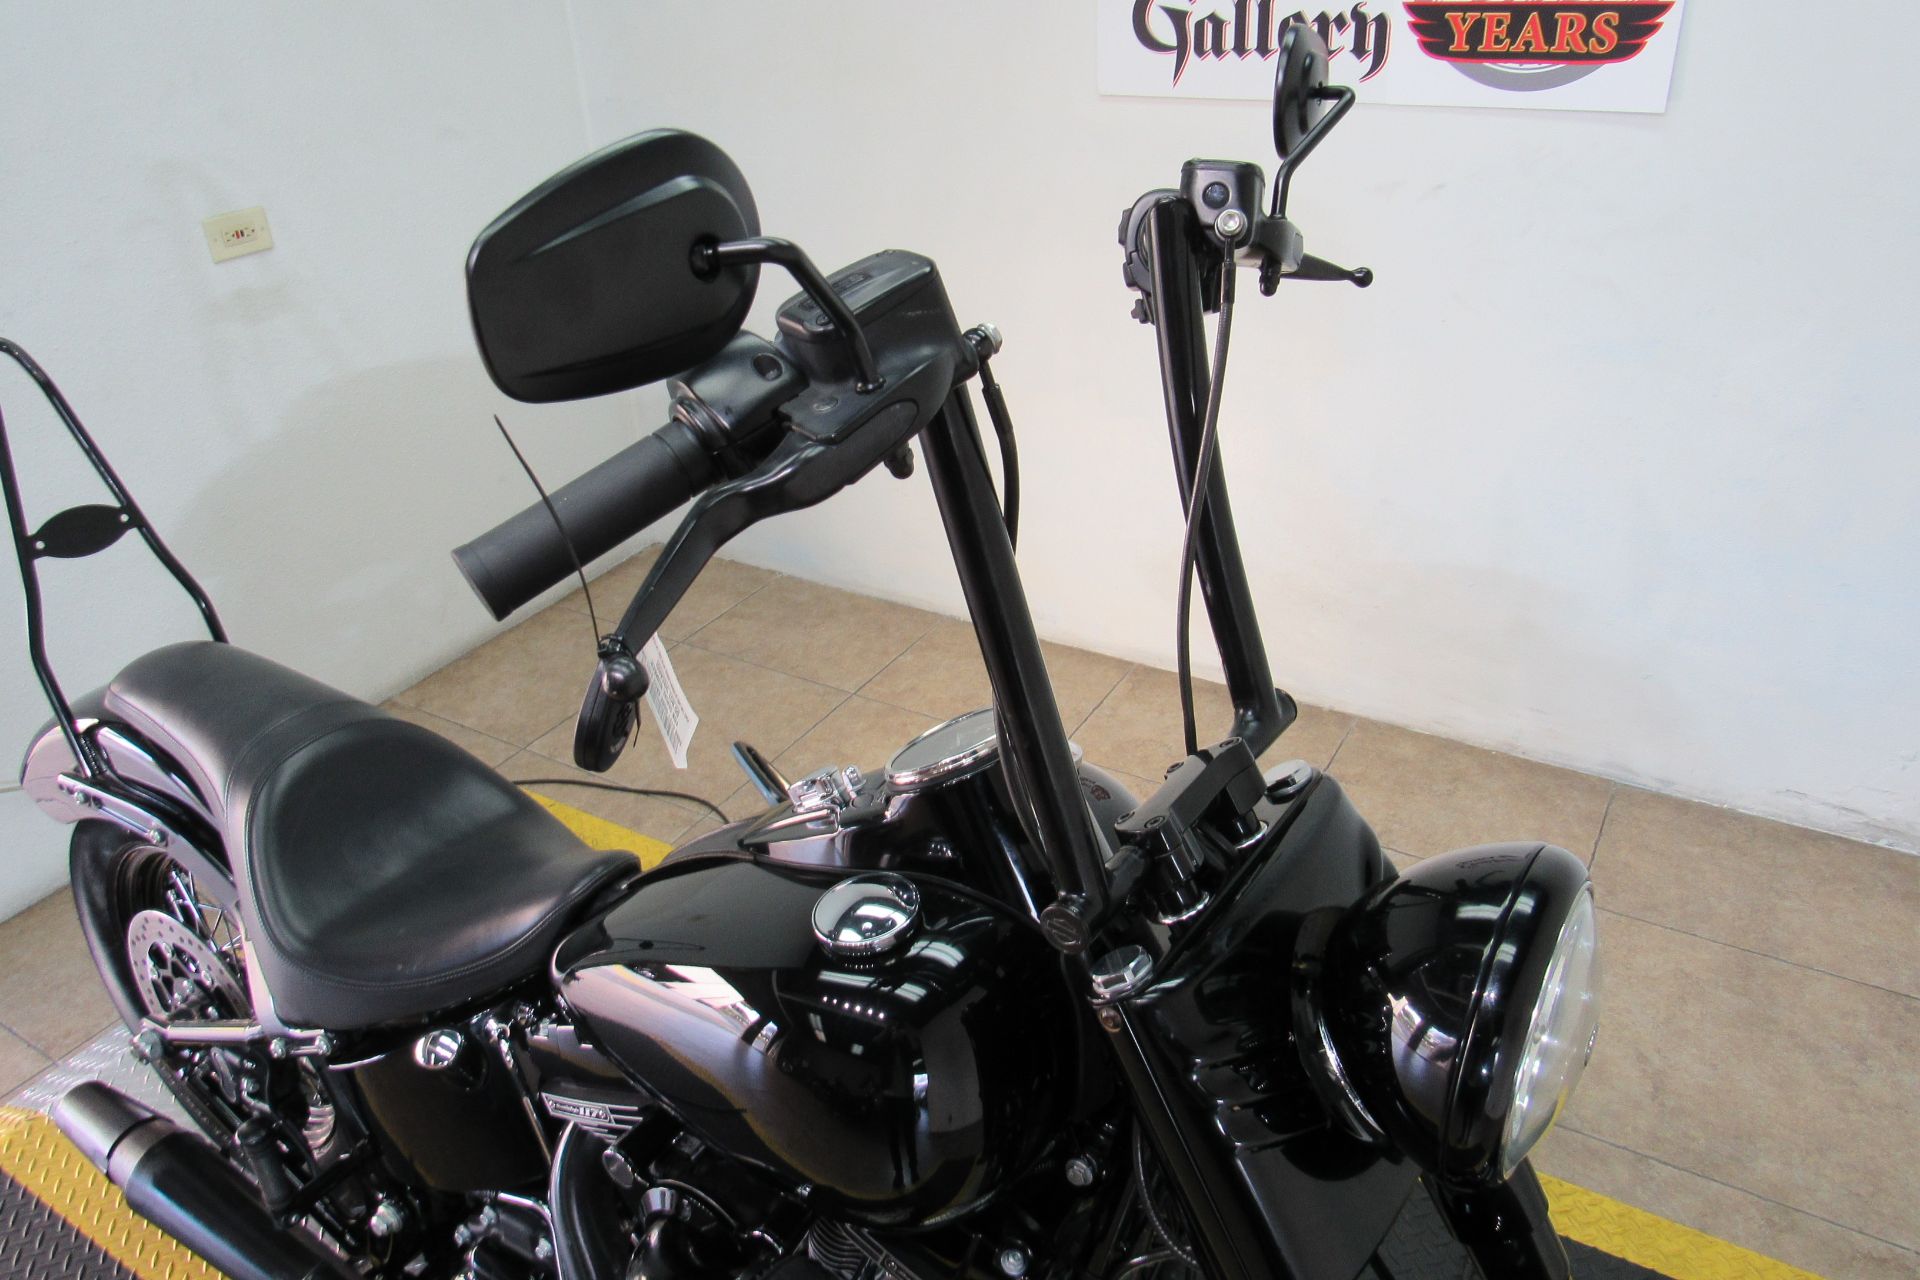 2016 Harley-Davidson Softail Slim® S in Temecula, California - Photo 23